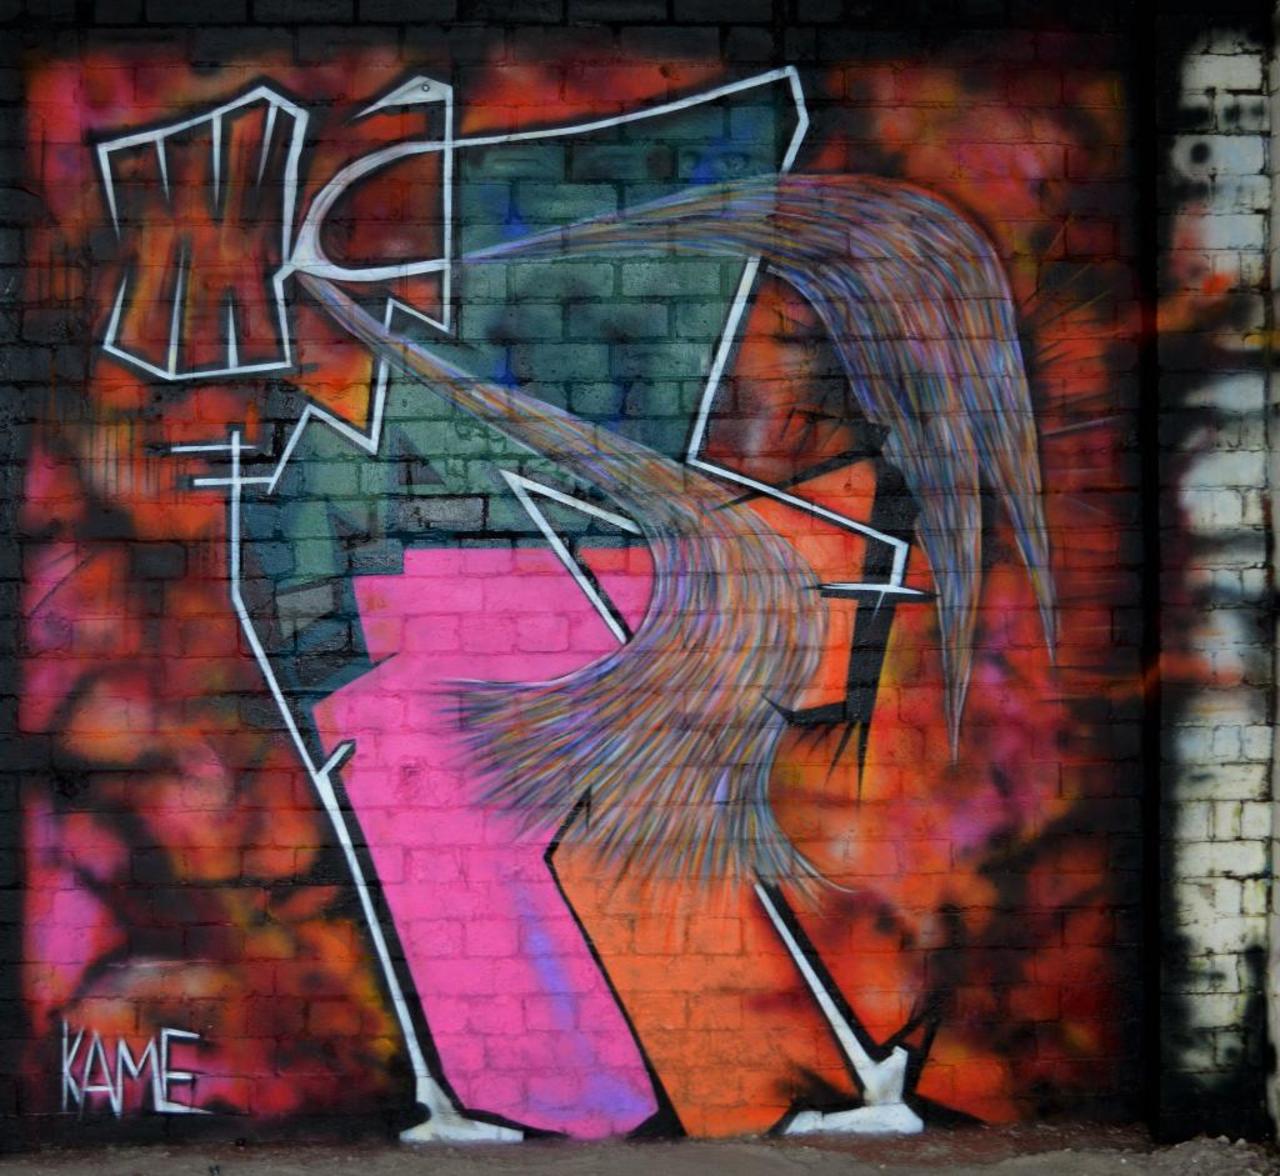 Electric Jaws part 2.. Aerosol work. JD. #contemporaryart #painting #art #graffiti #streetart #design #urbex #artist http://t.co/ye8x3f8jR4